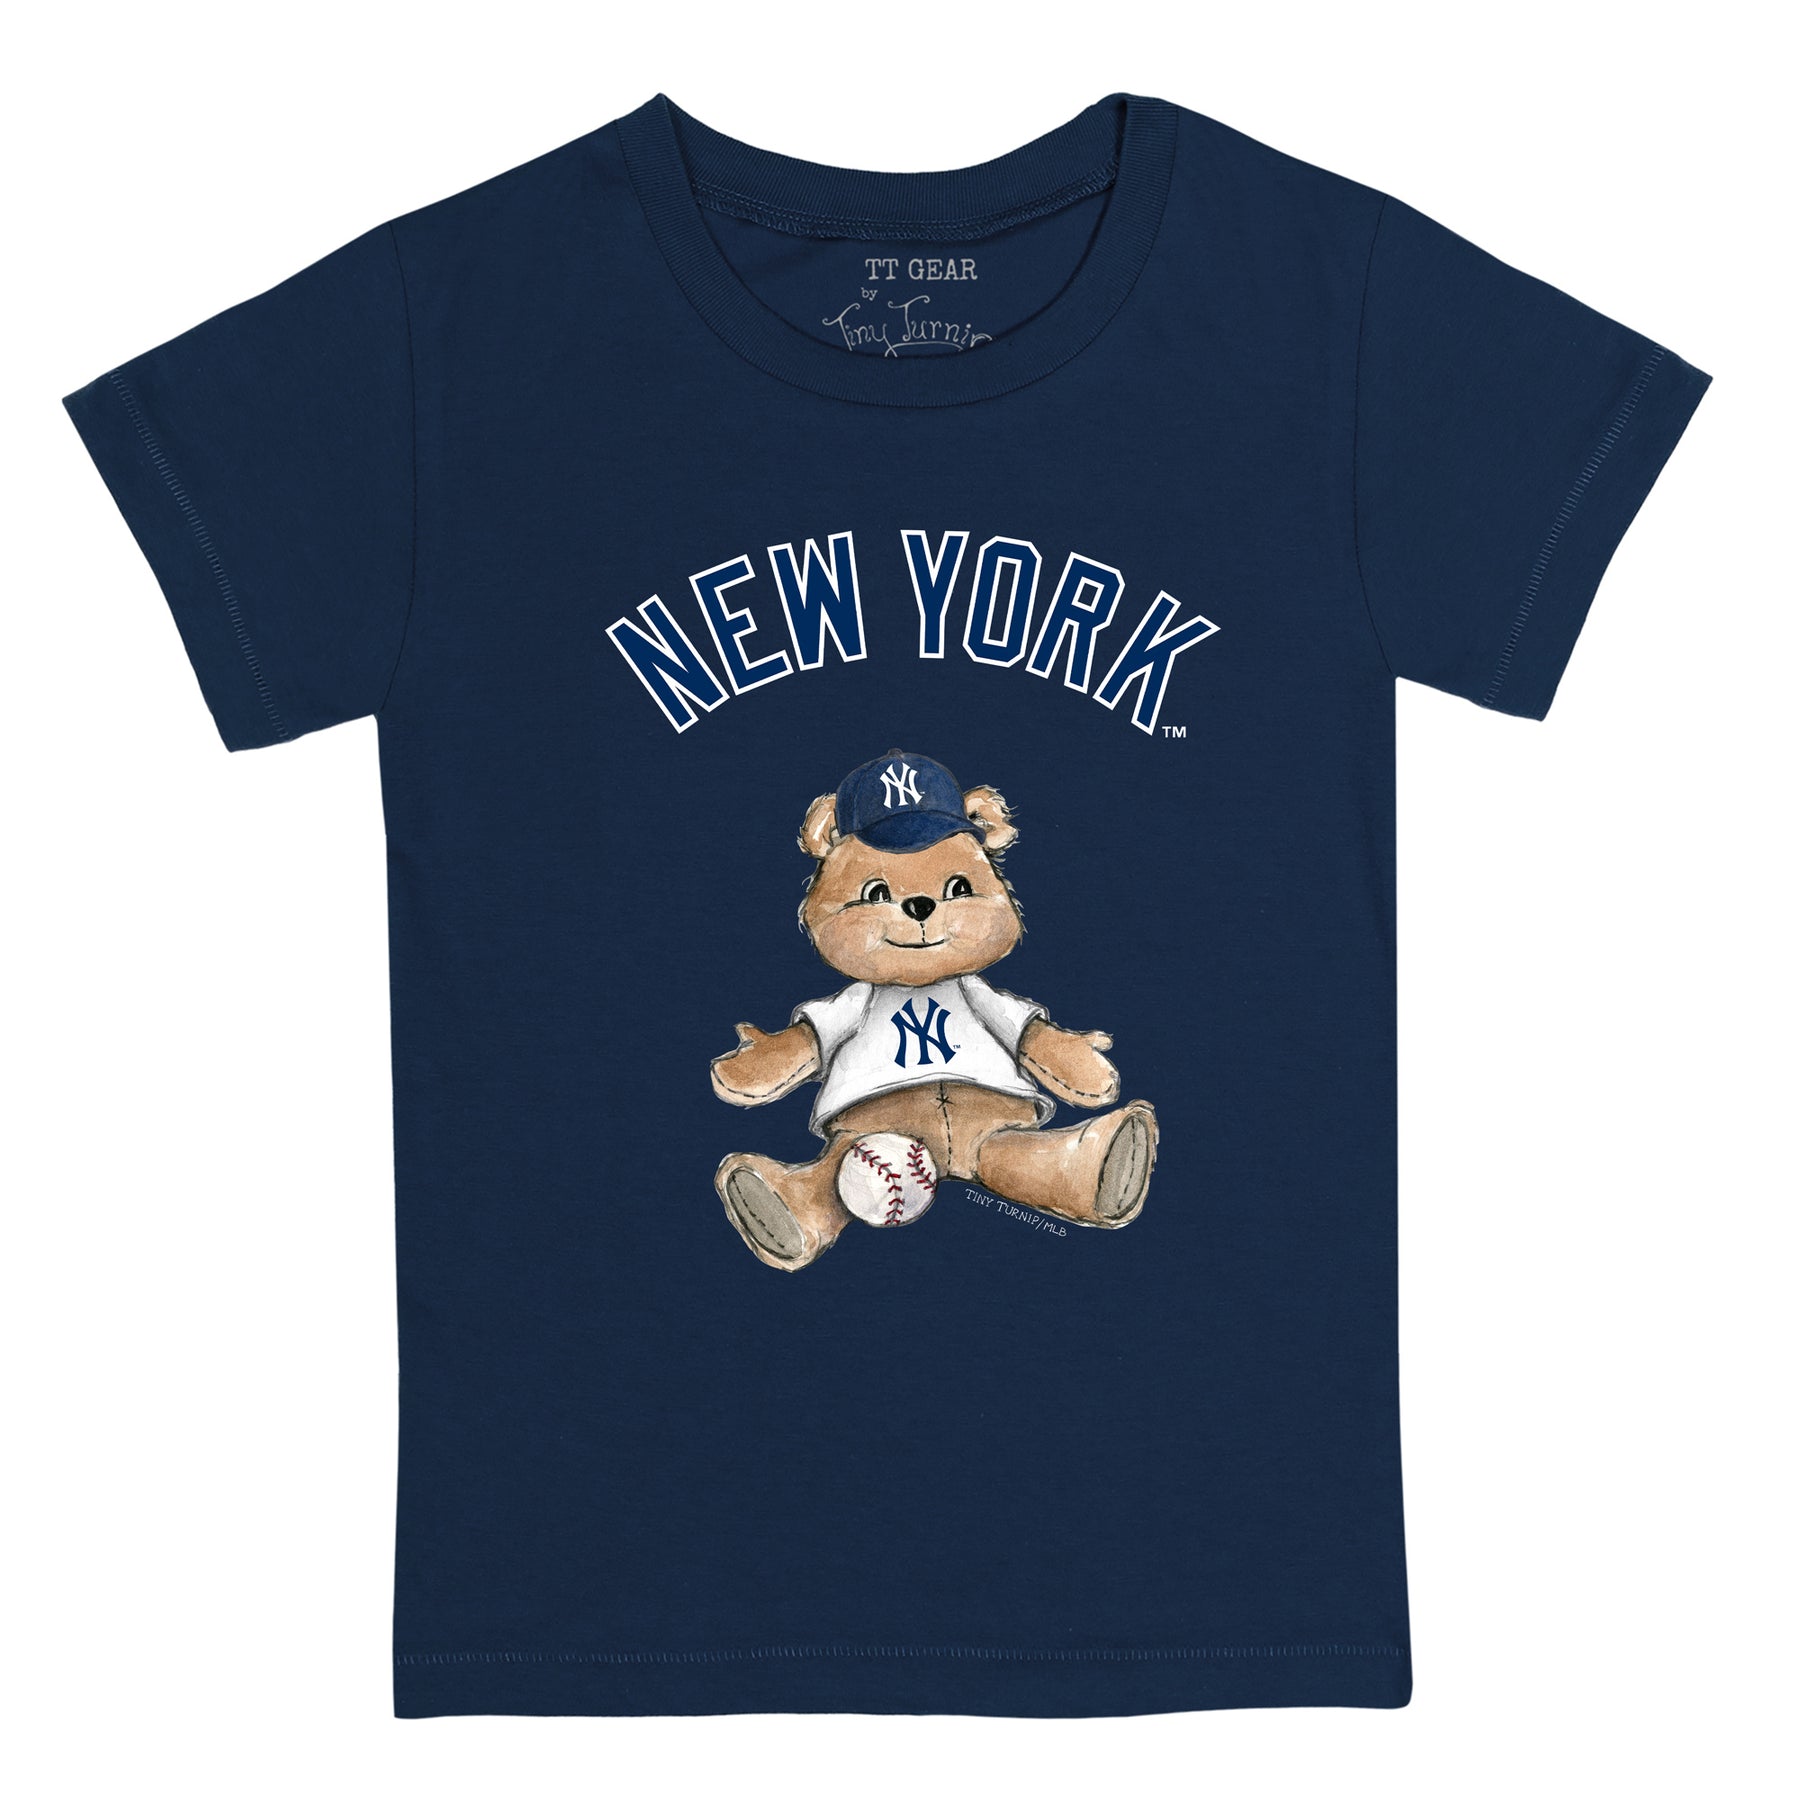 Tiny Turnip Boston Red Sox Boy Teddy Tee Shirt Women's Medium / White